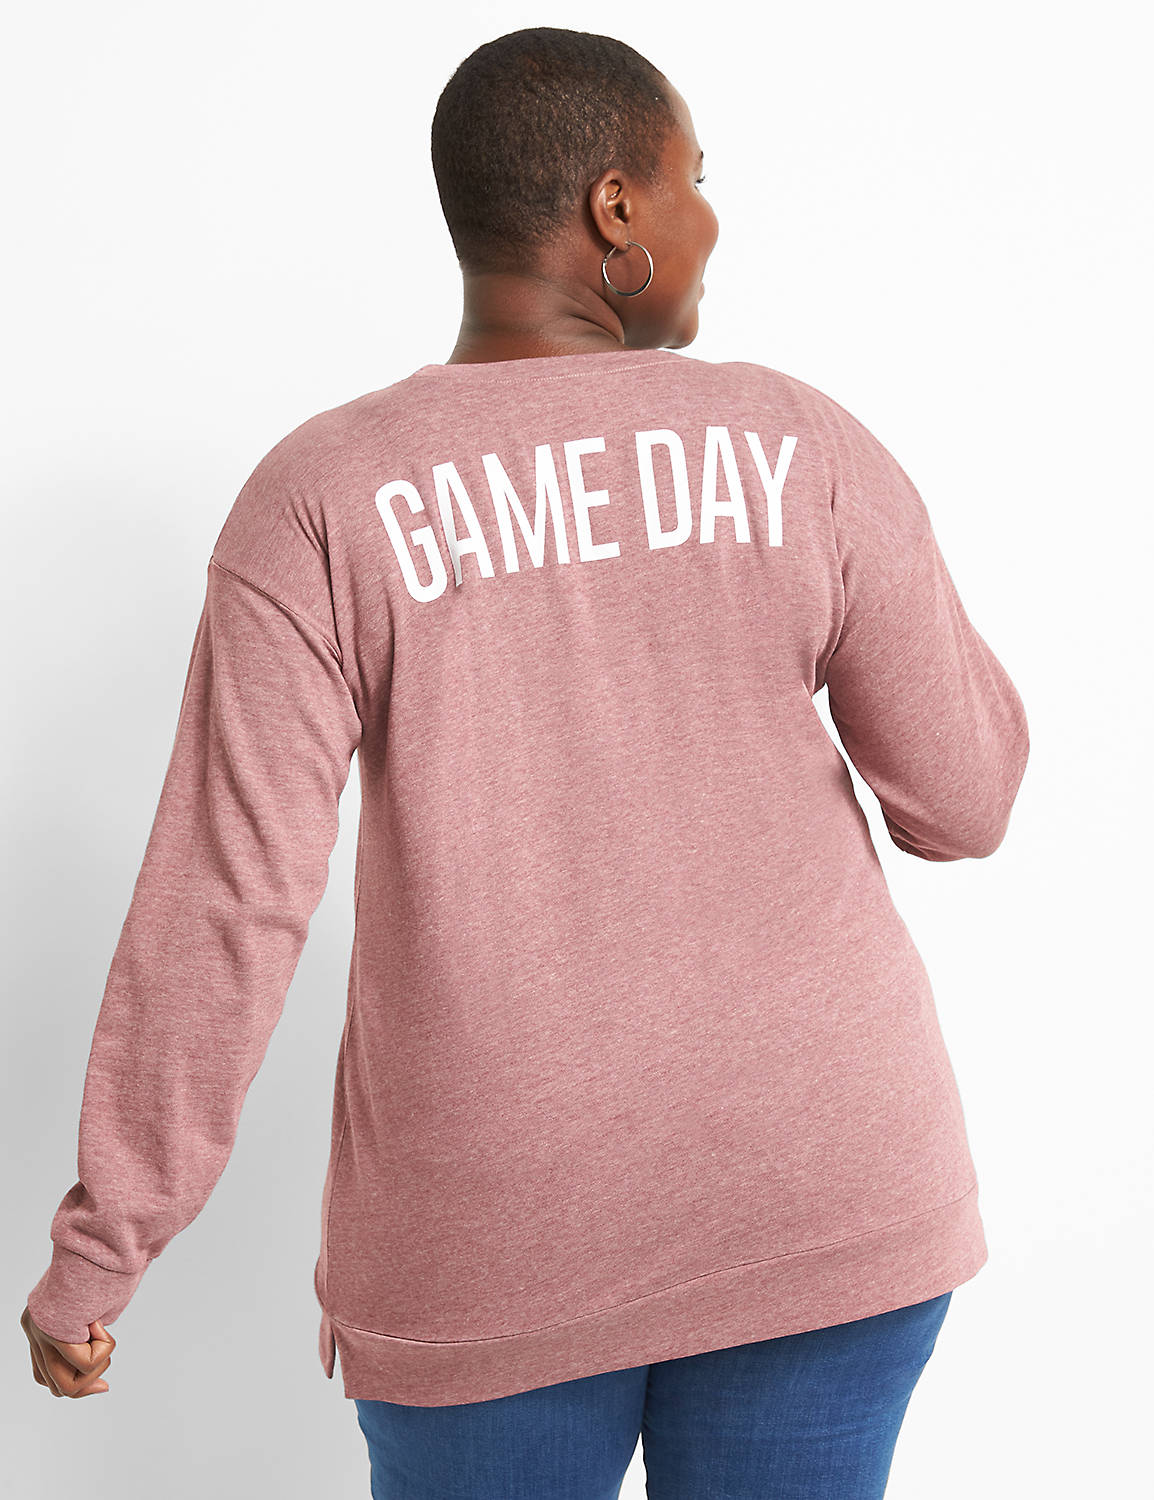 Game Day Graphic Sweatshirt Product Image 2